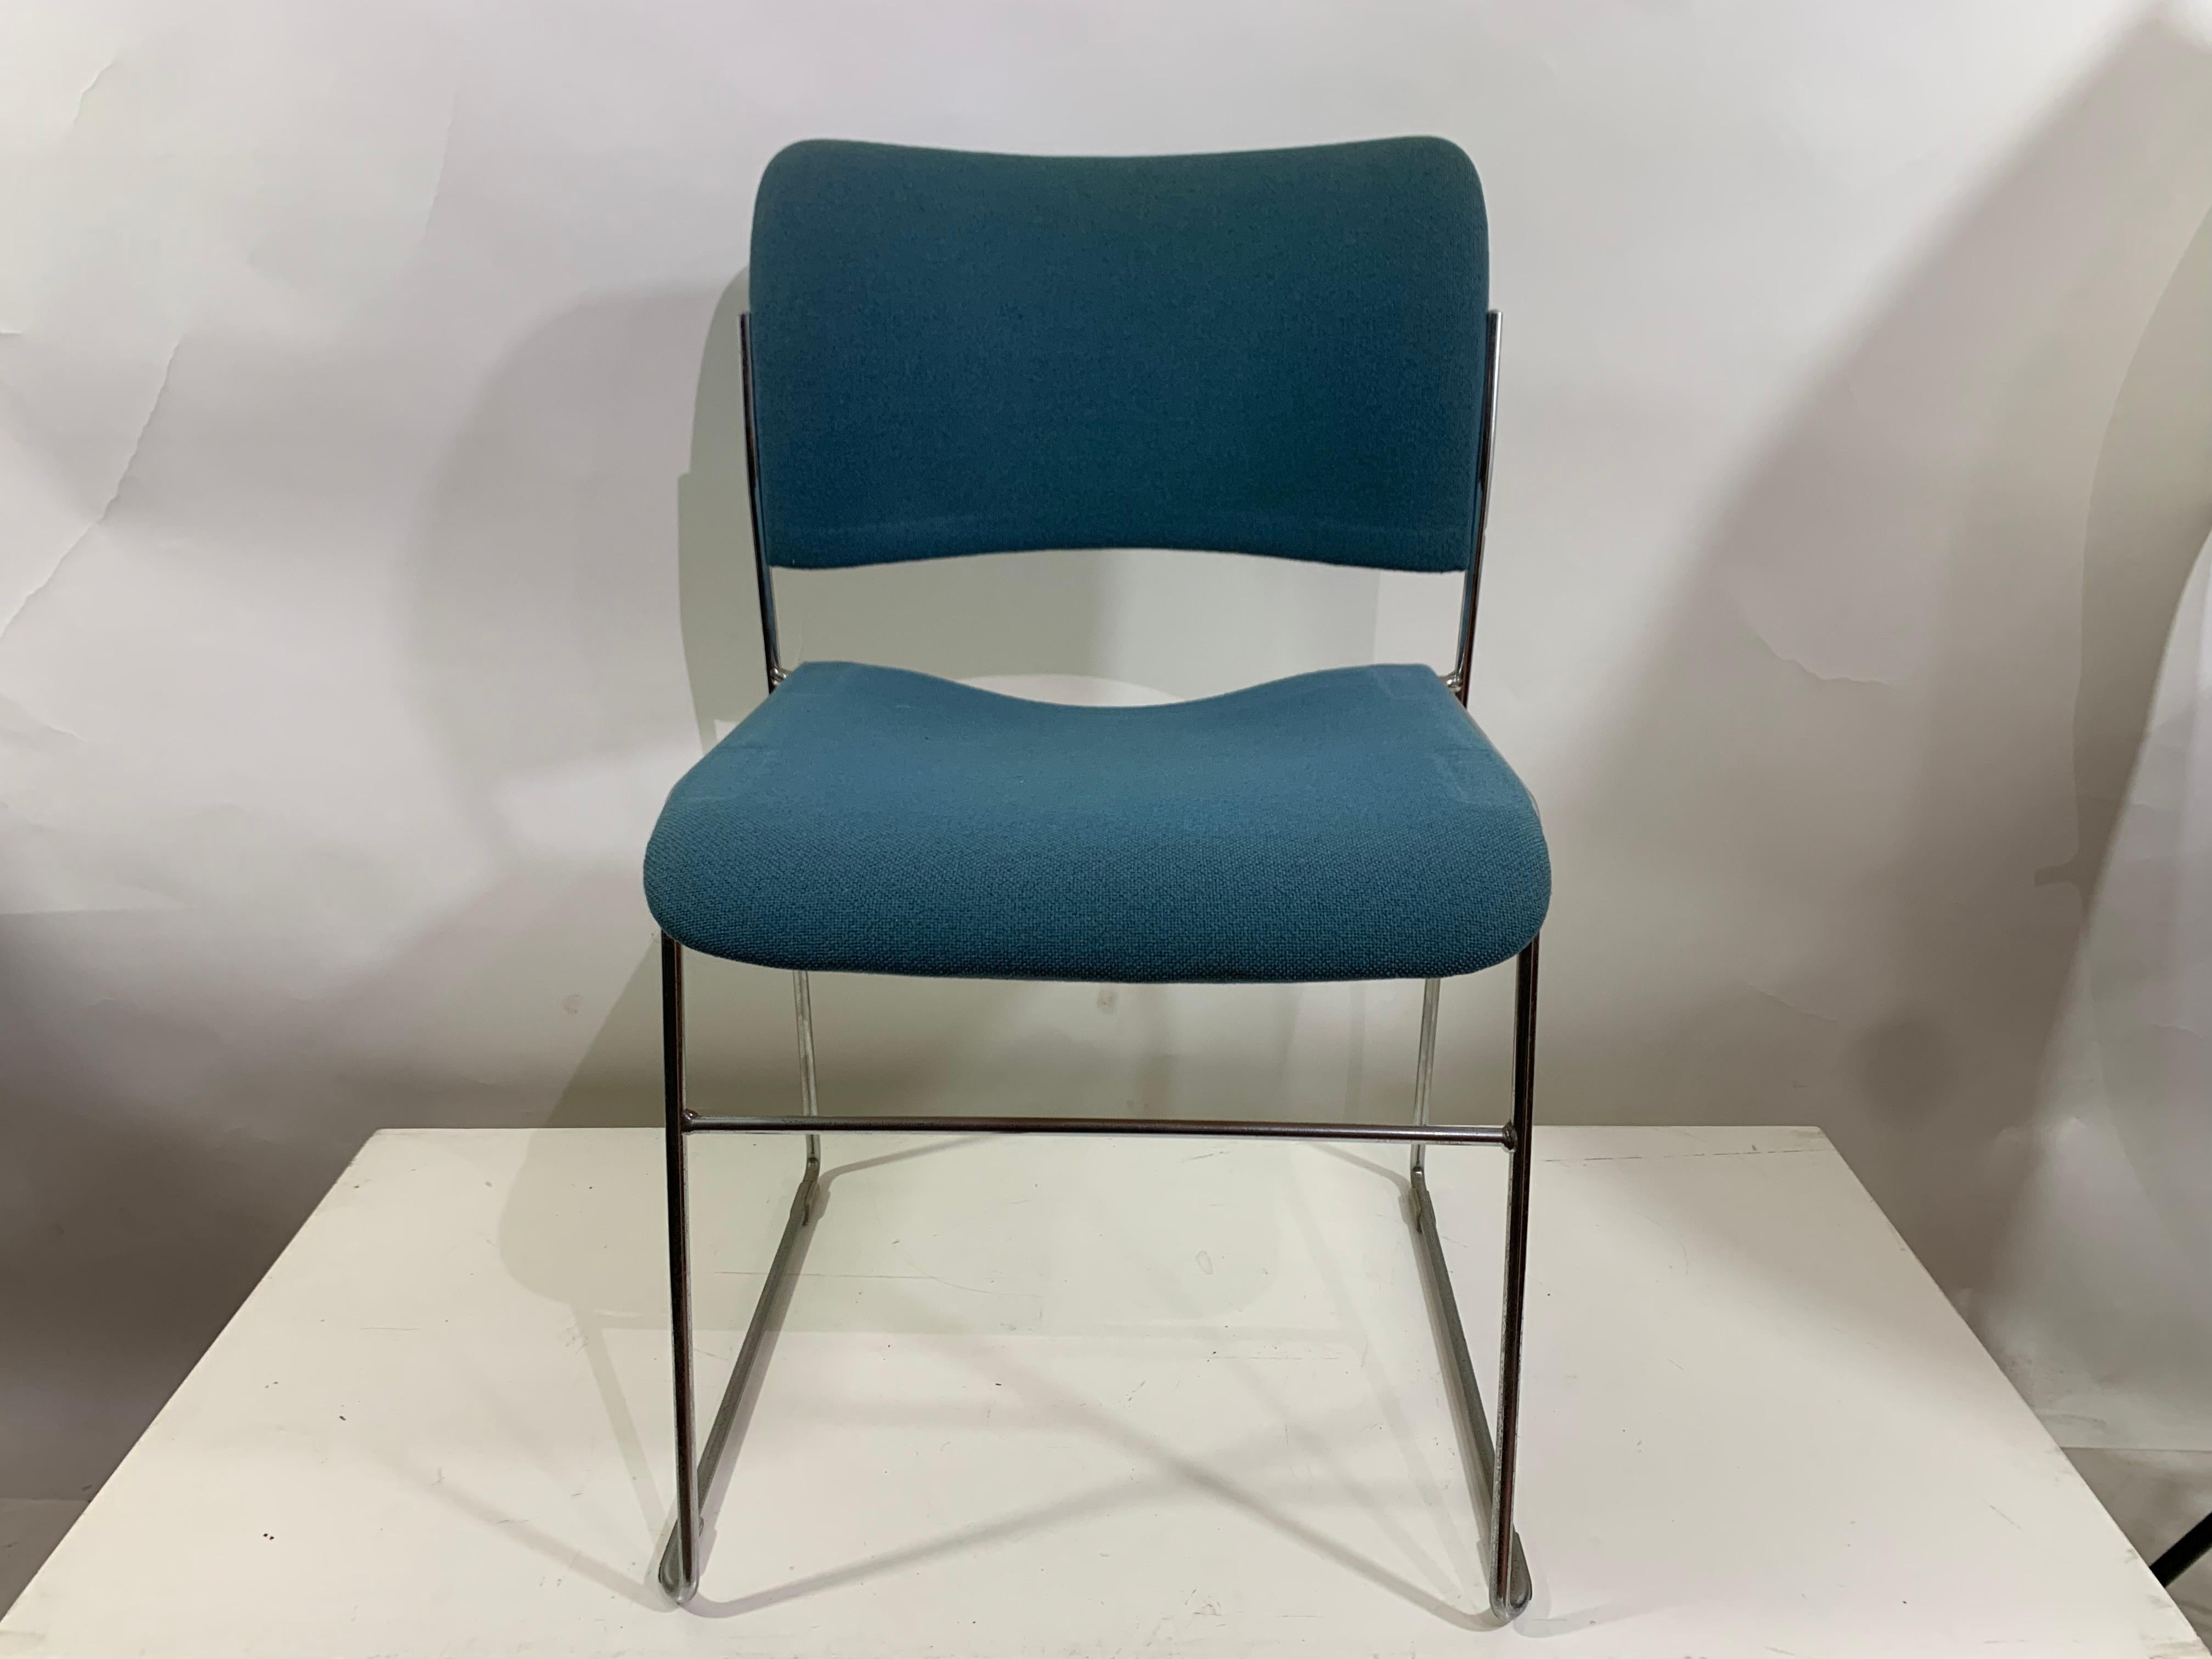 david rowland 40/4 chair price